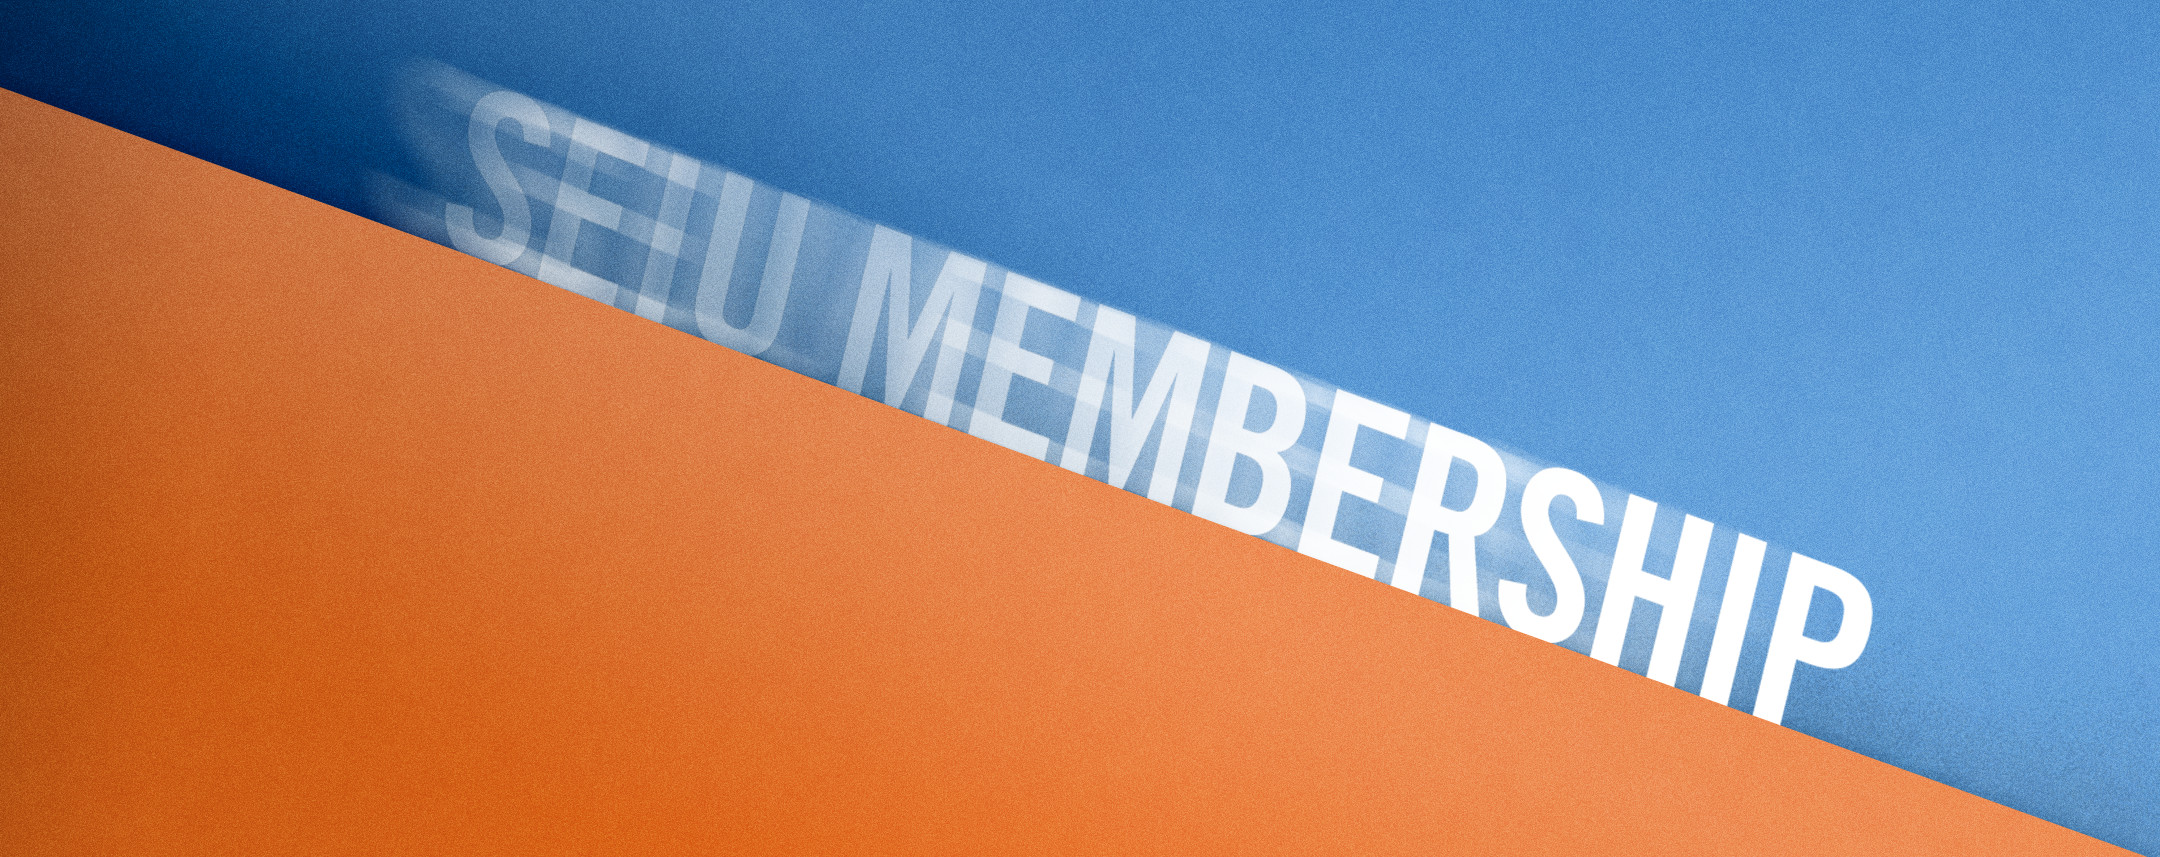 SEIU-Membership-FEATURED.jpg